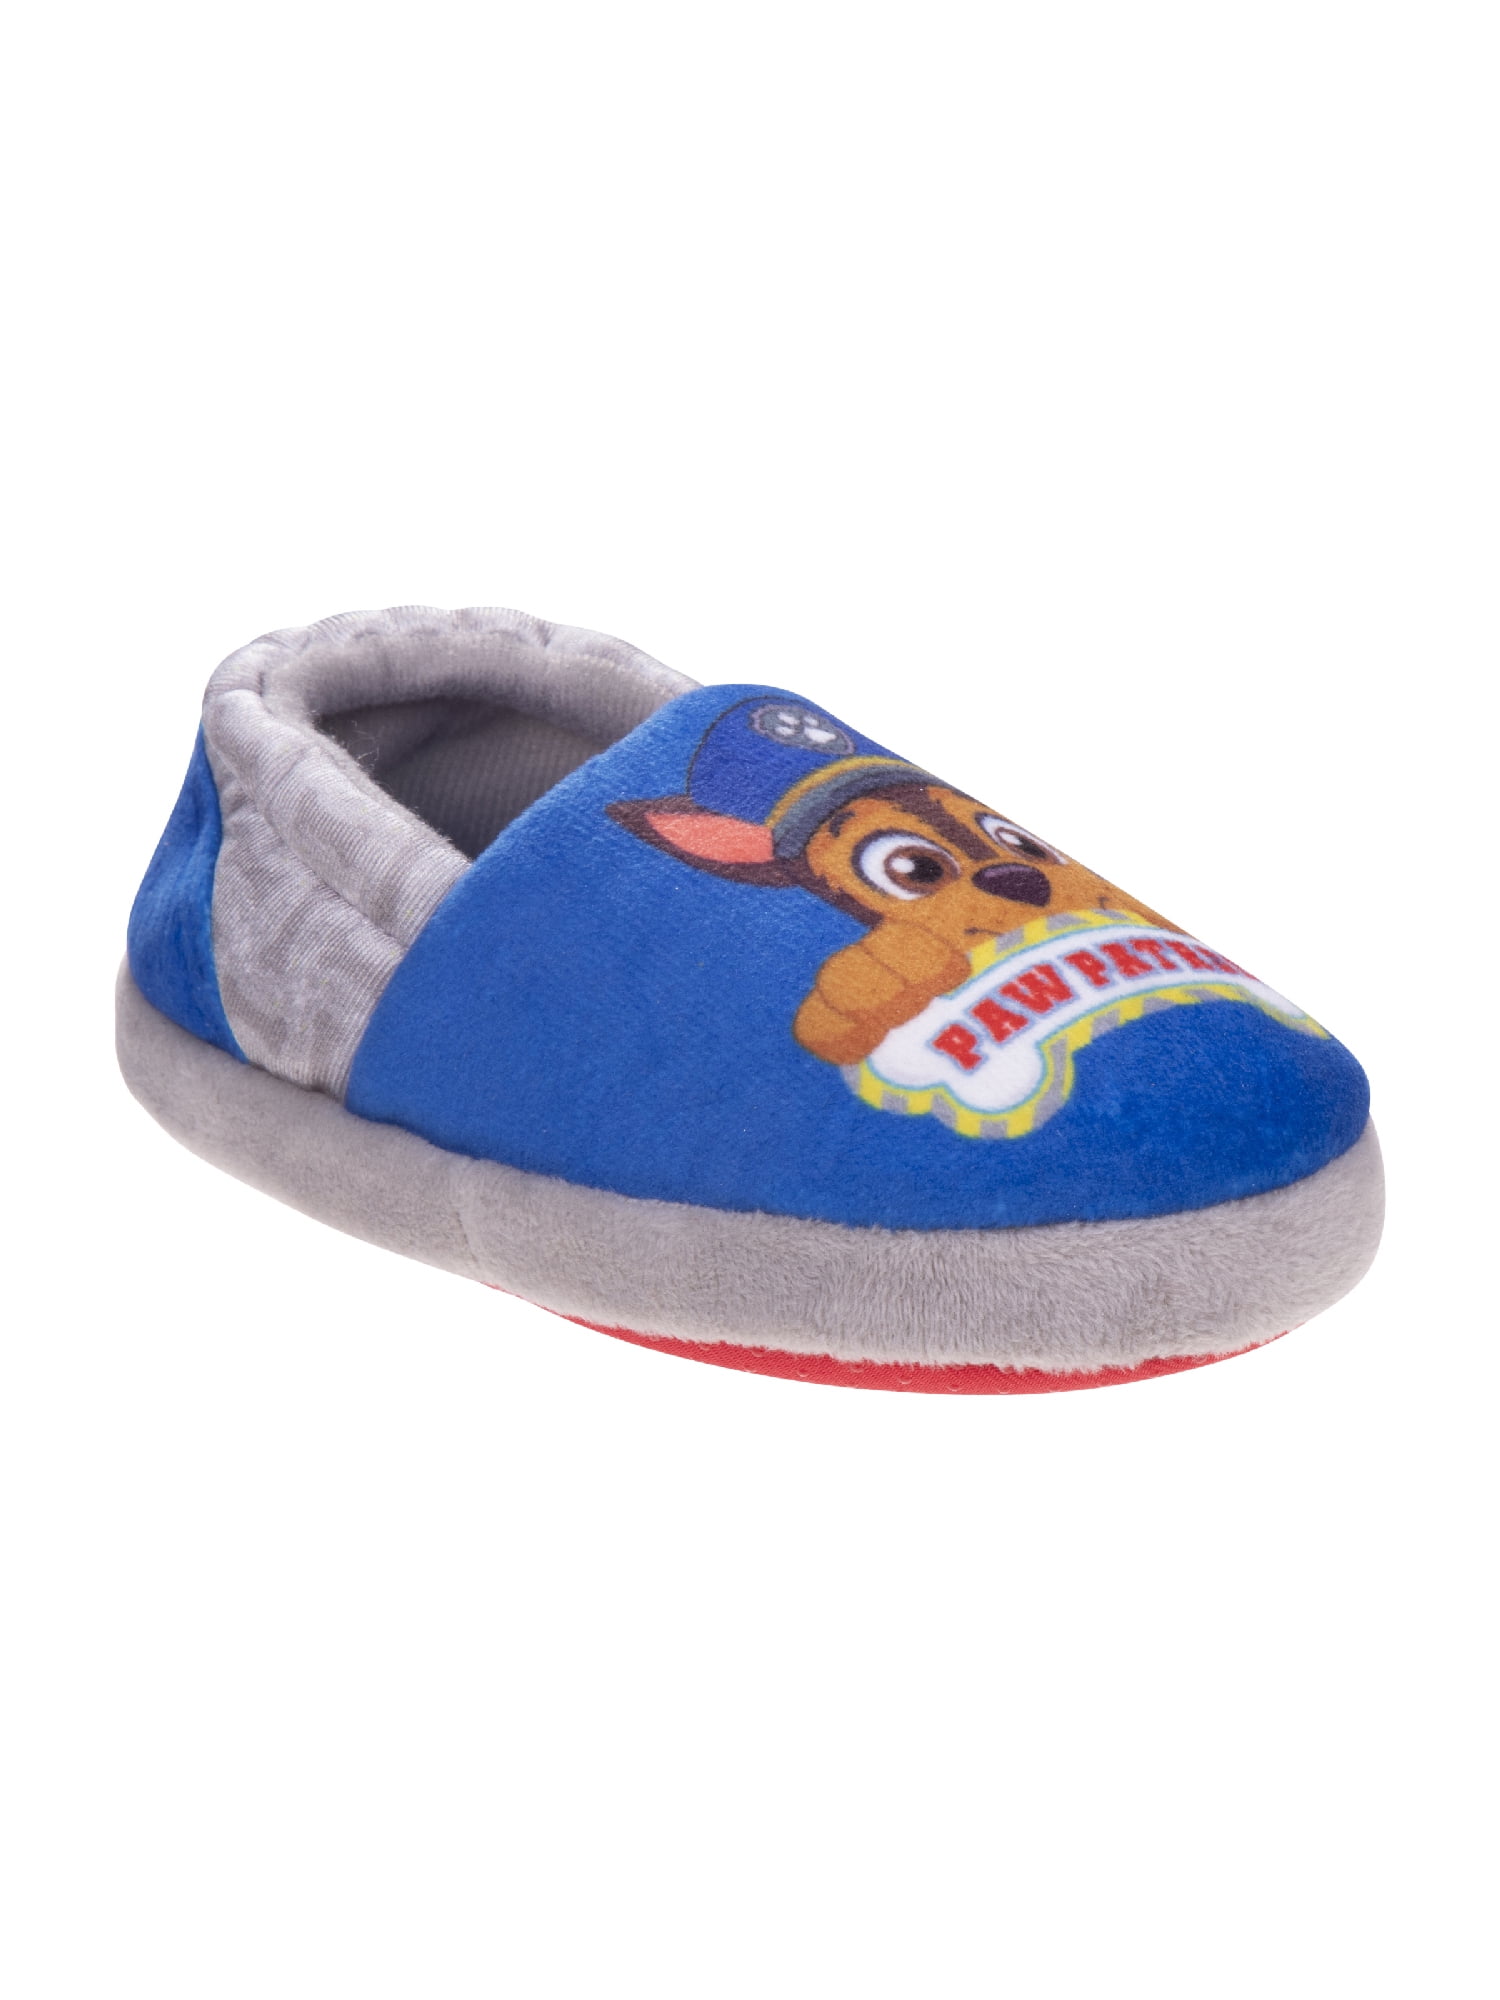 paw patrol slippers walmart